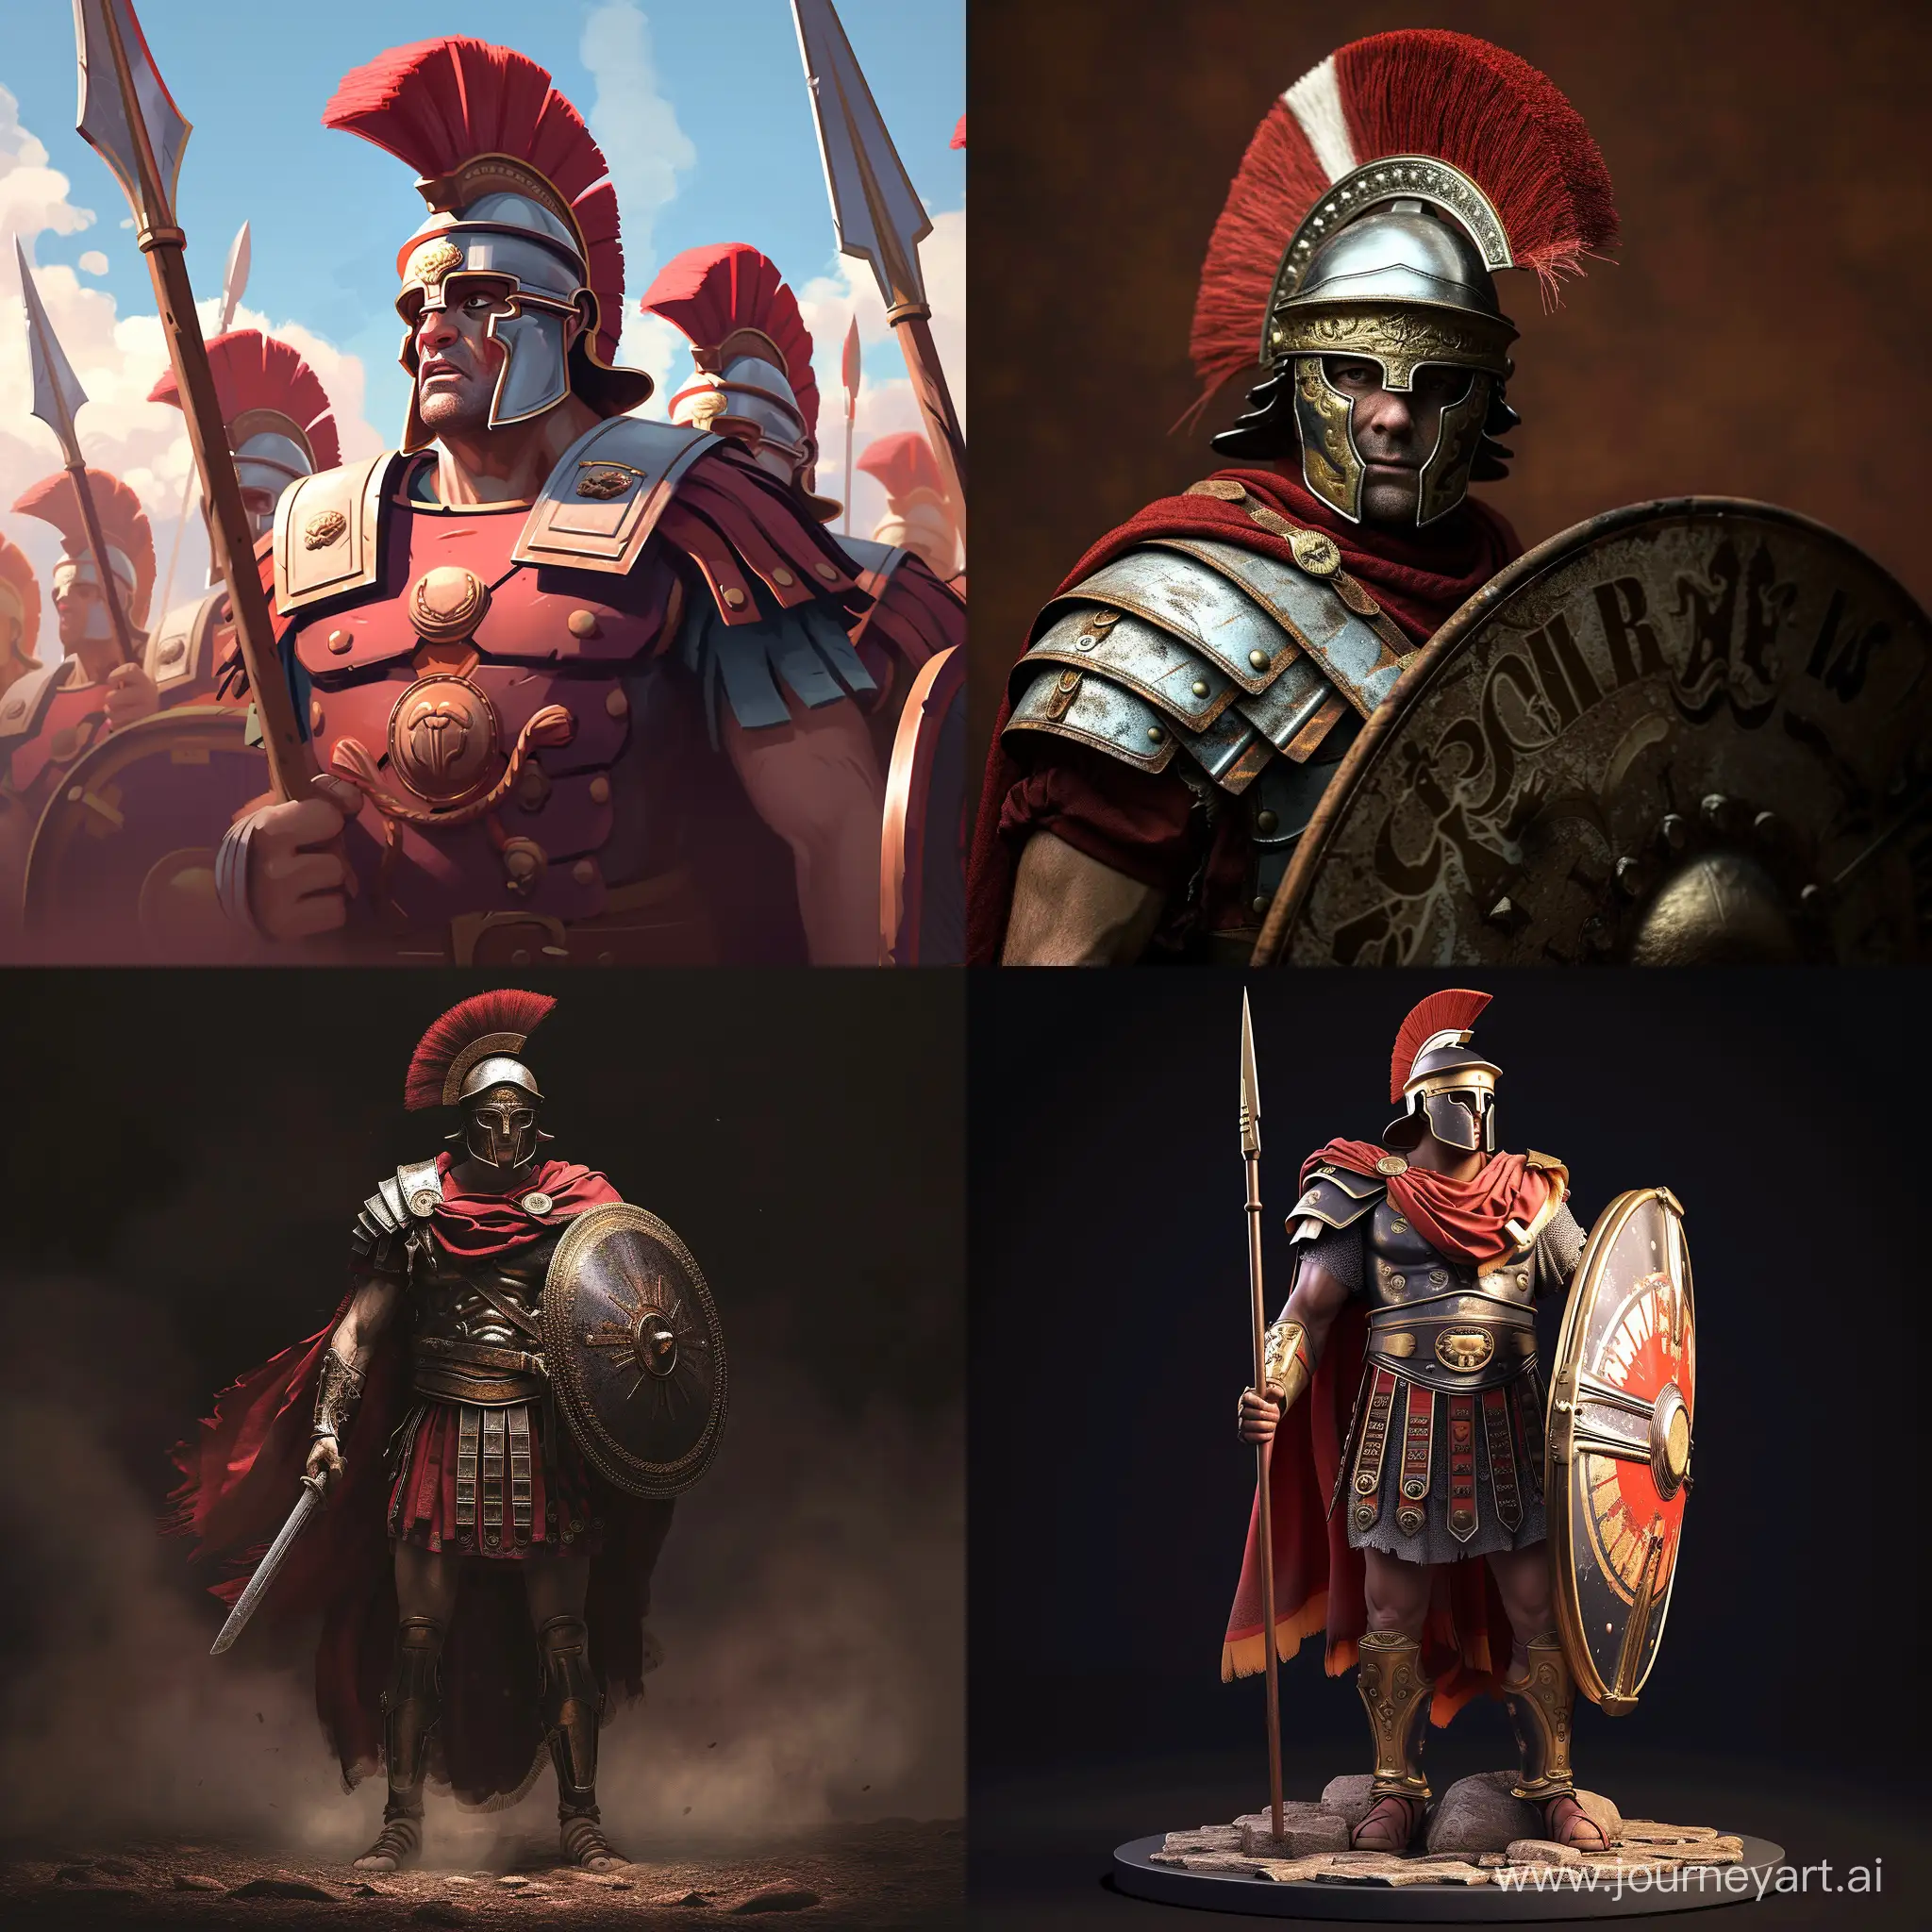 Roman-Legionary-in-Epic-Clash-of-Clan-Style-Battle